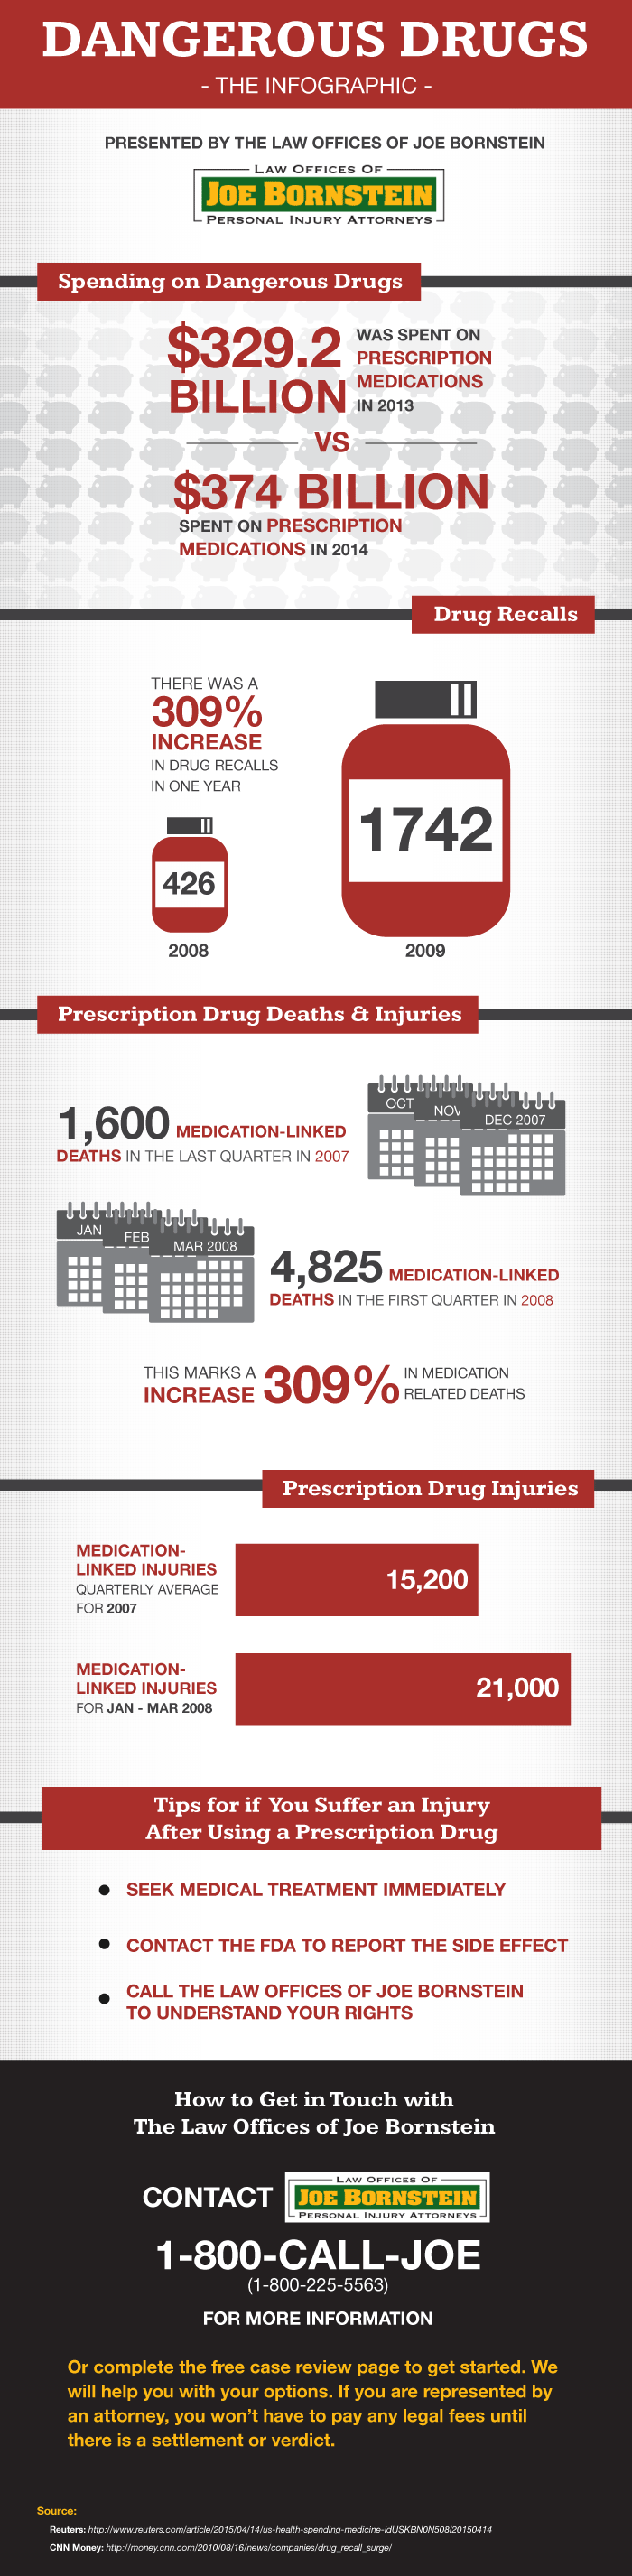 Bornstein Dangerous Drugs infographic